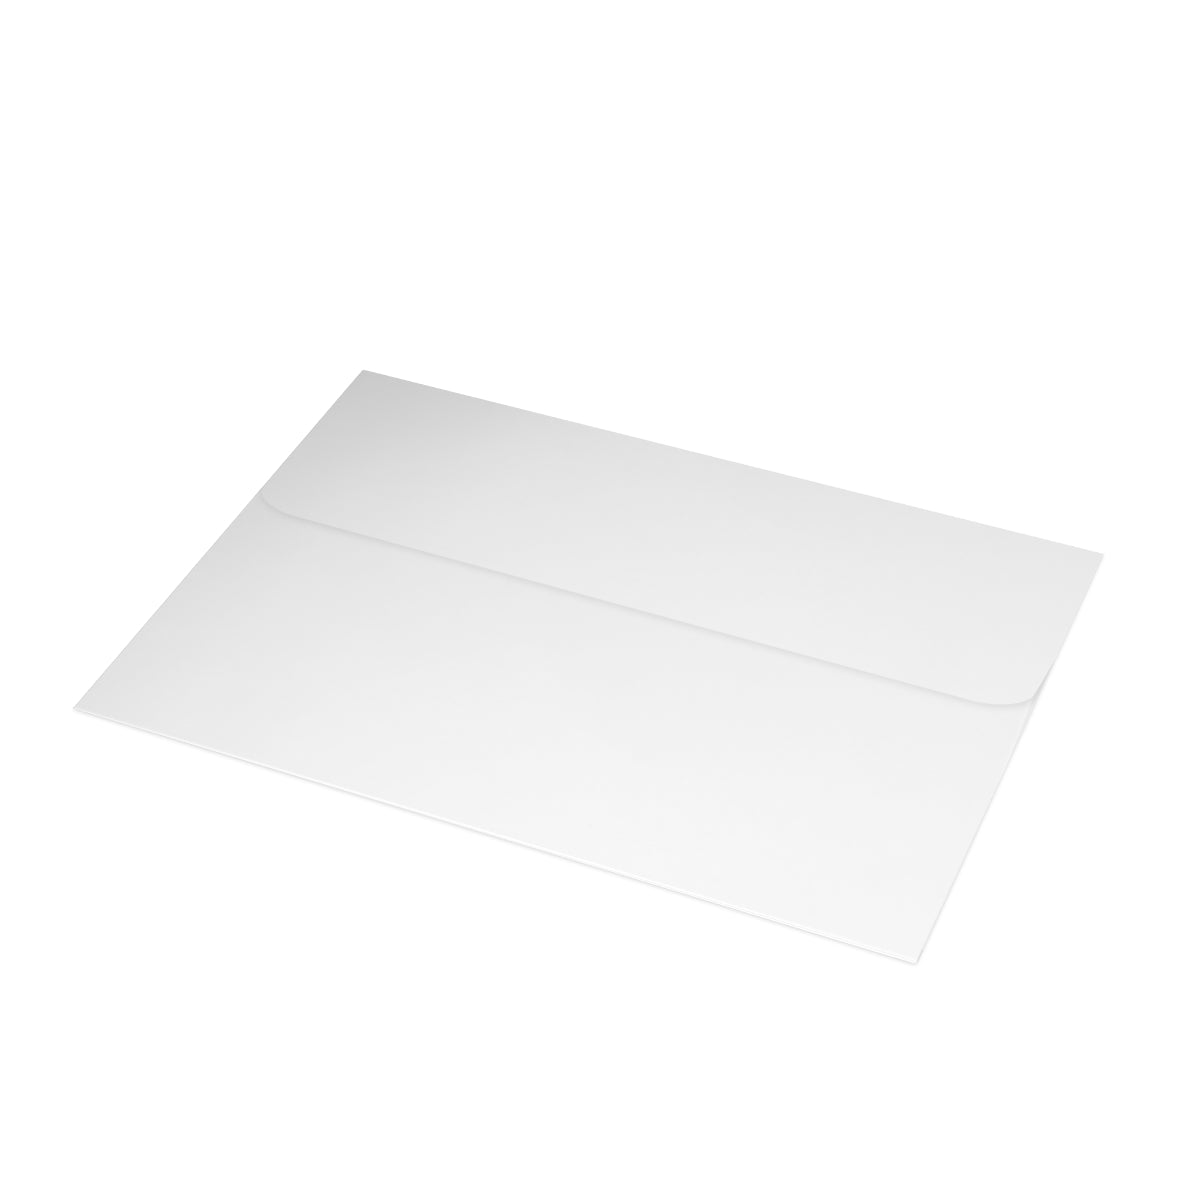 Monterey + Carmel Folded Matte Notecards + Envelopes (10pcs)